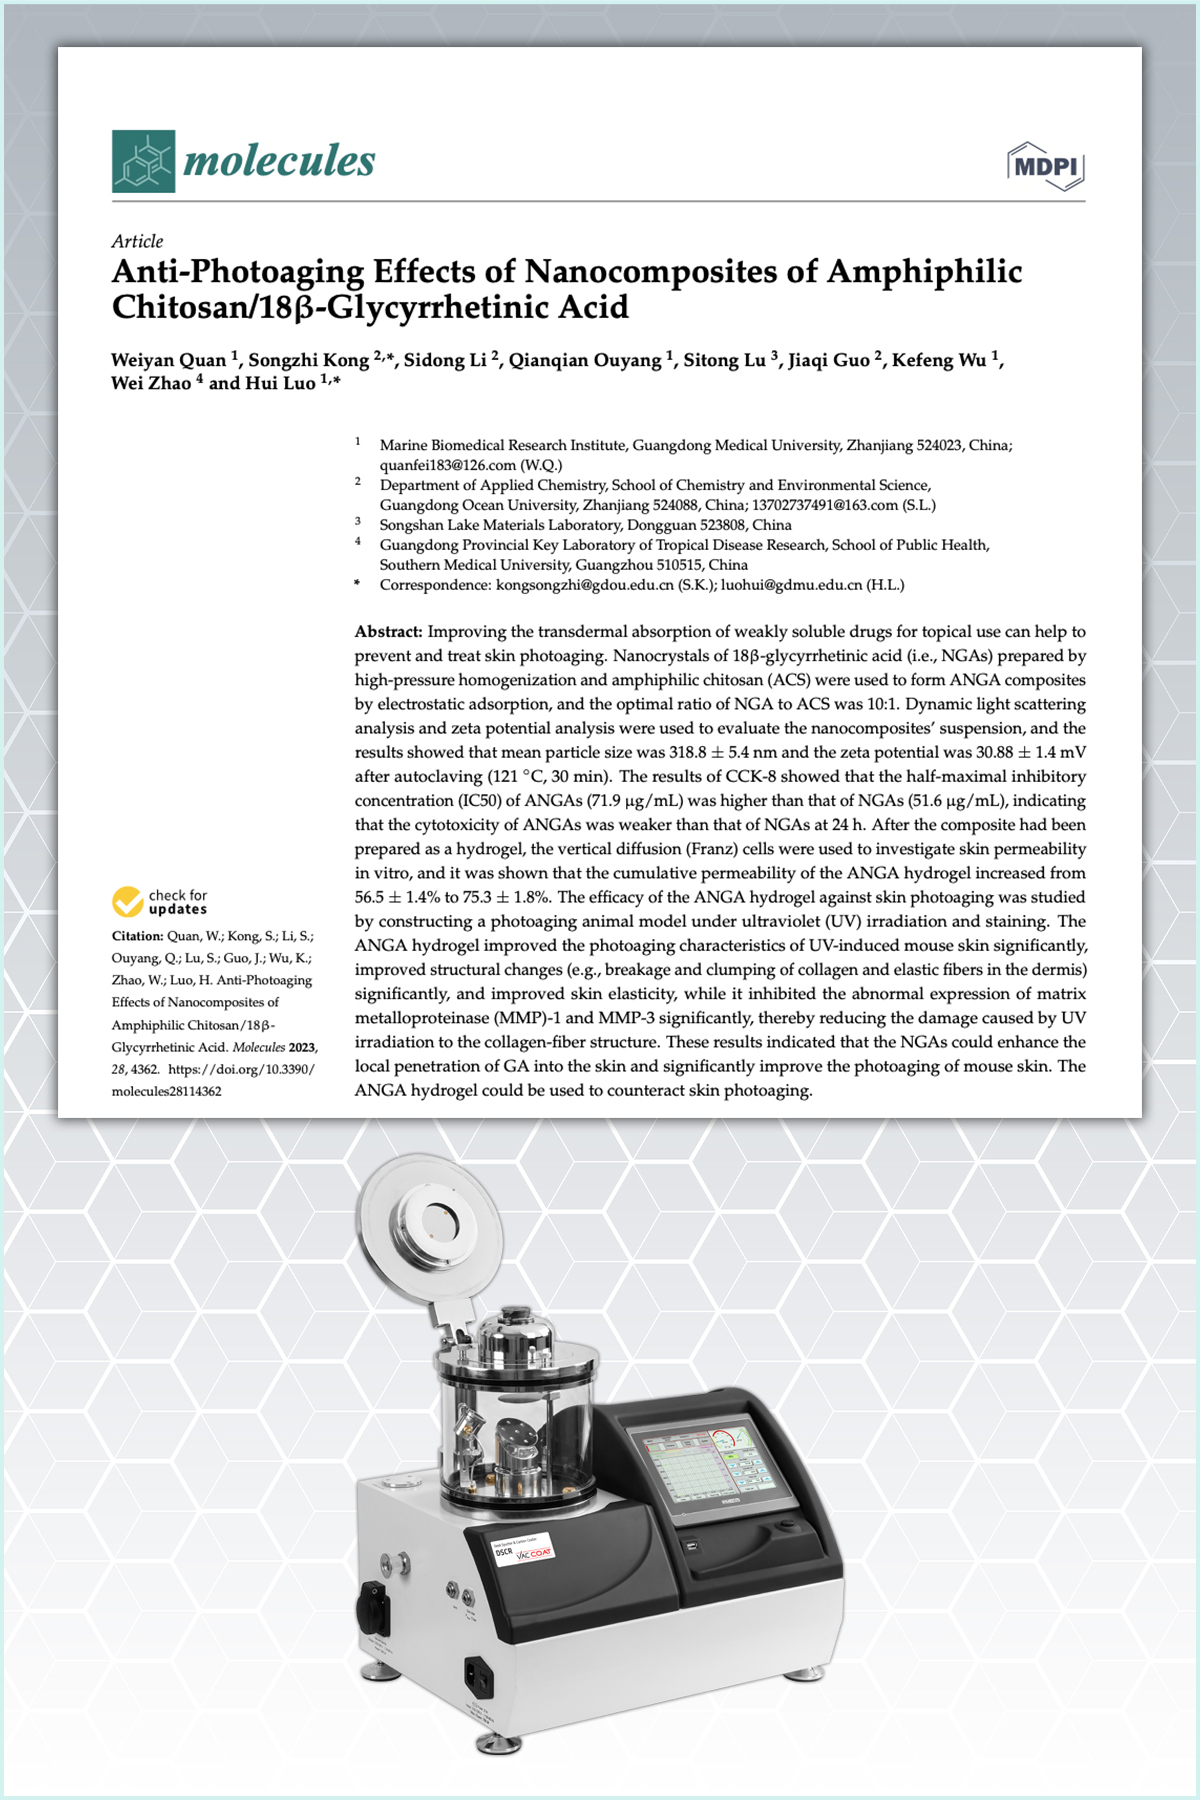 Anti-Photoaging Effects of Nanocomposites of Amphiphilic Chitosan/18β-Glycyrrhetinic Acid